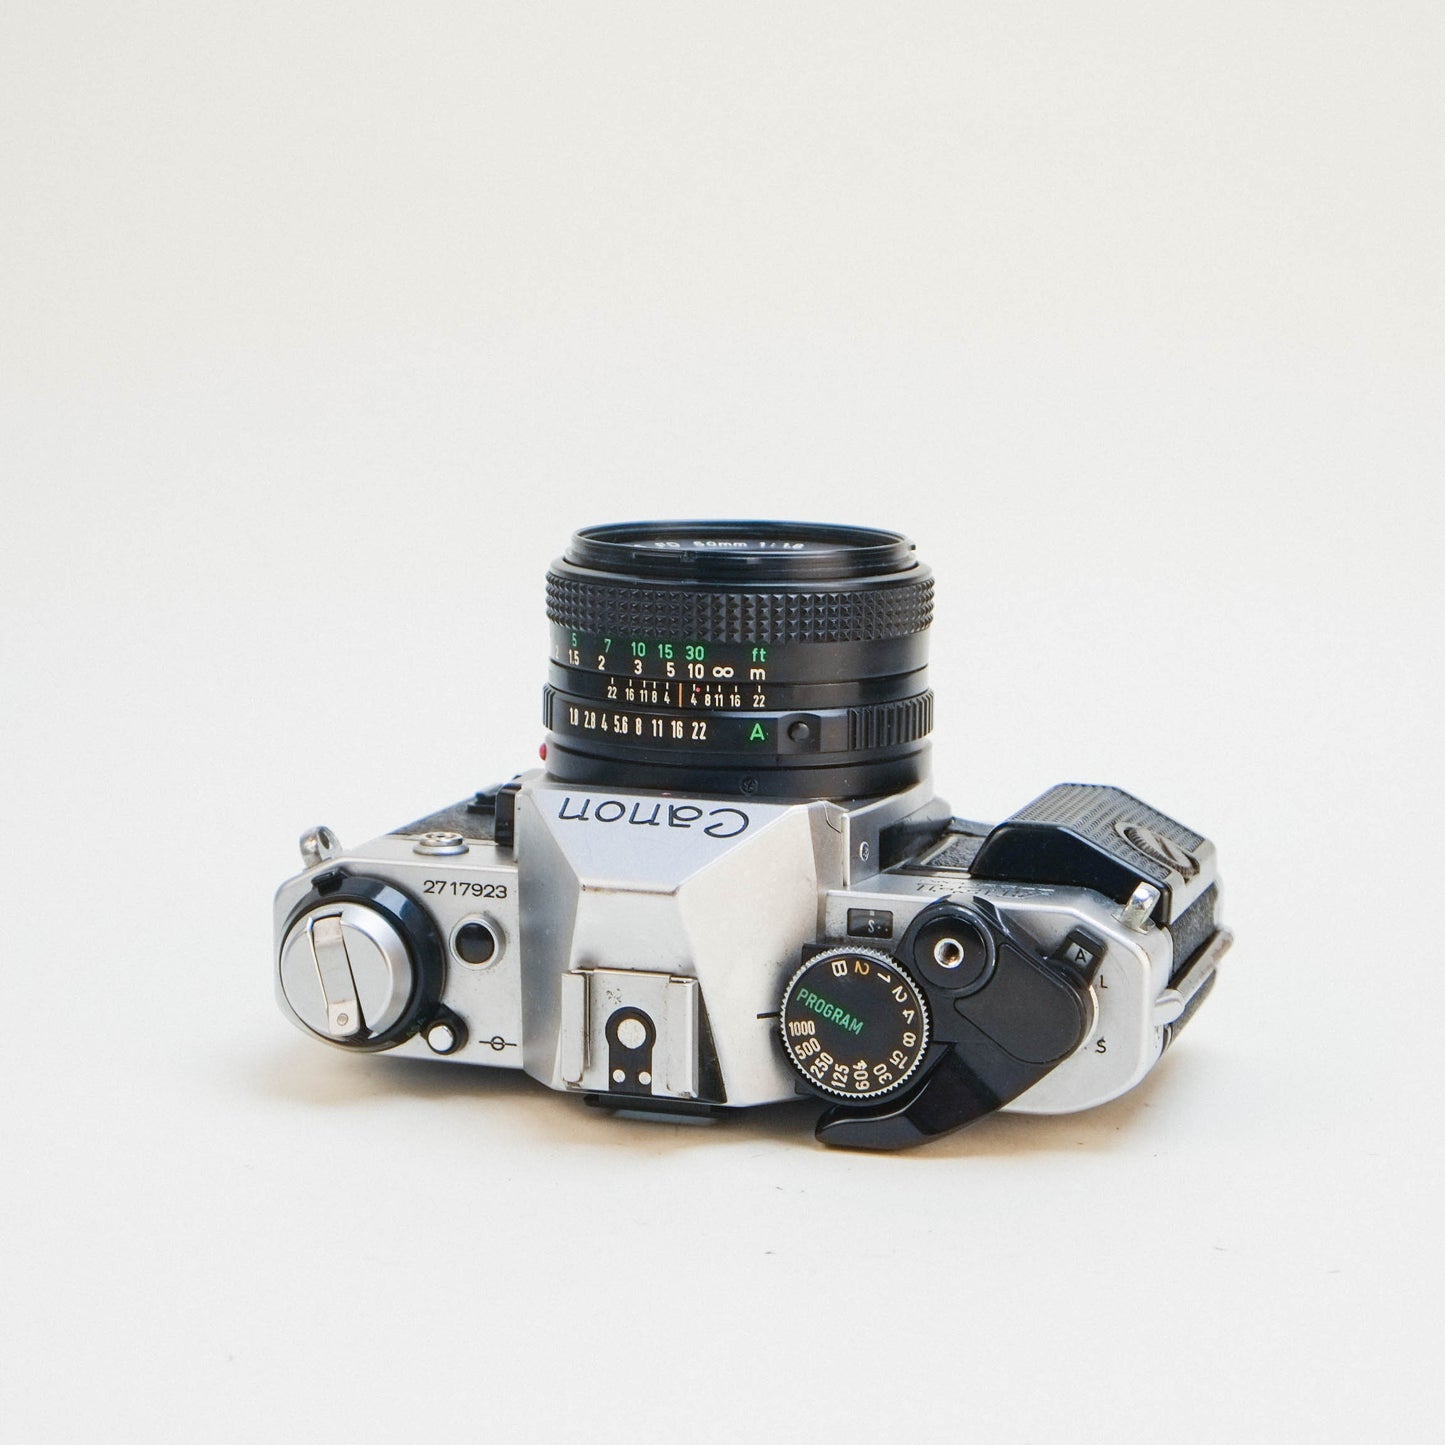 Canon AE-1 Program /w Canon 50mm f1.8 FDn [35mm kit]